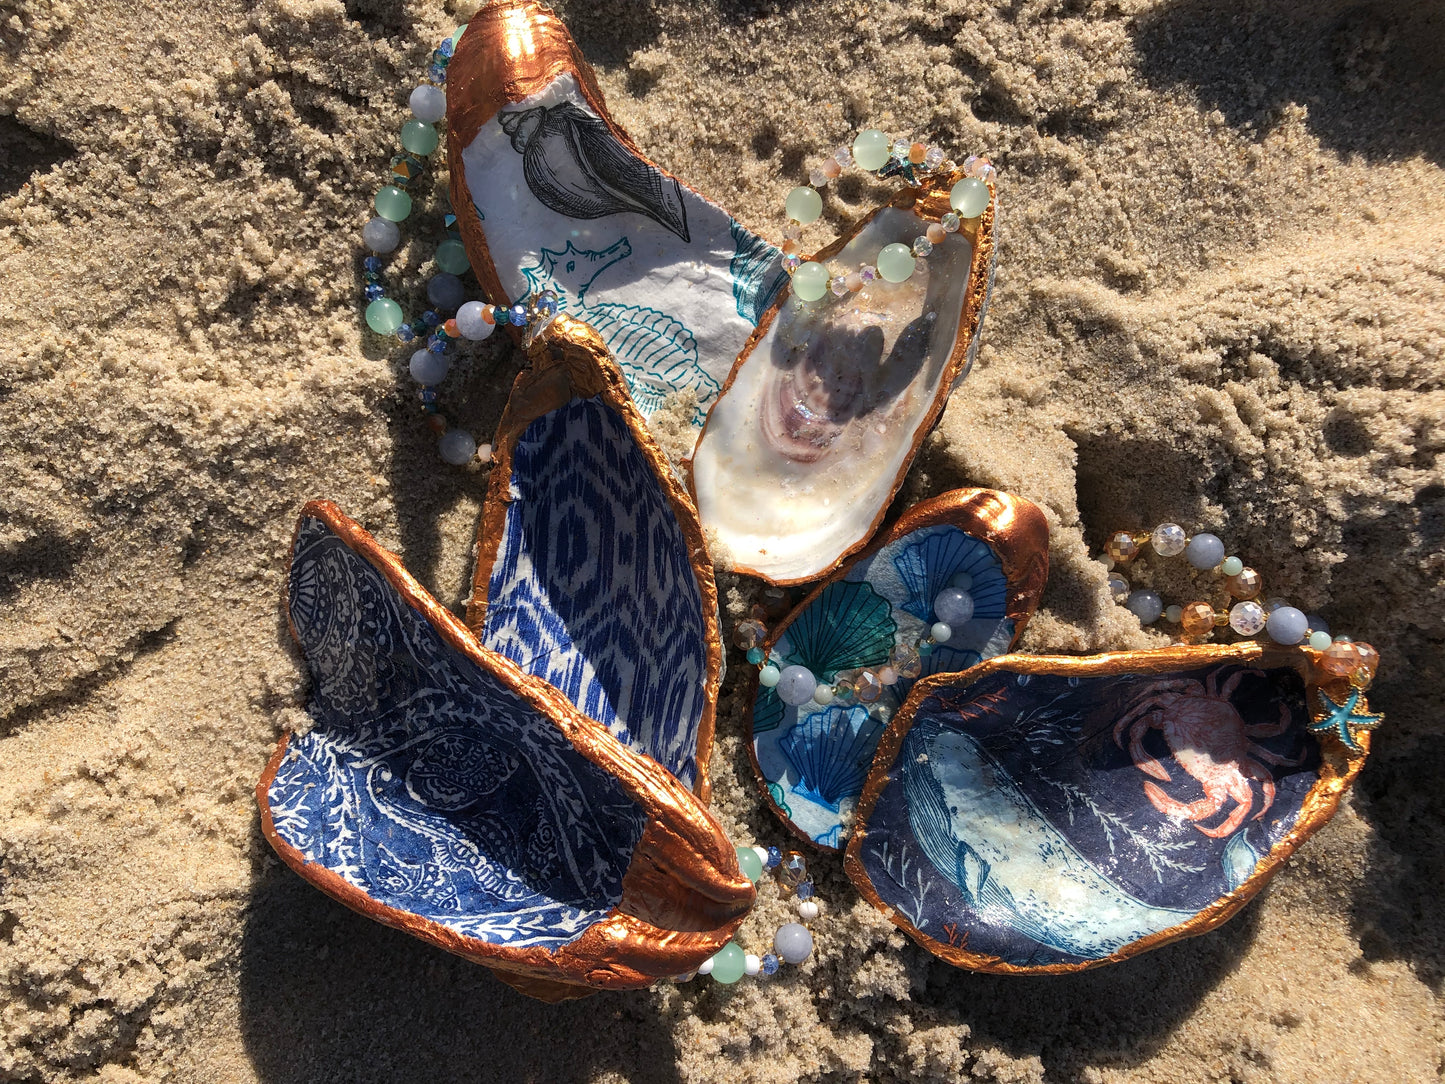 North Ocean Beach Oyster Shell